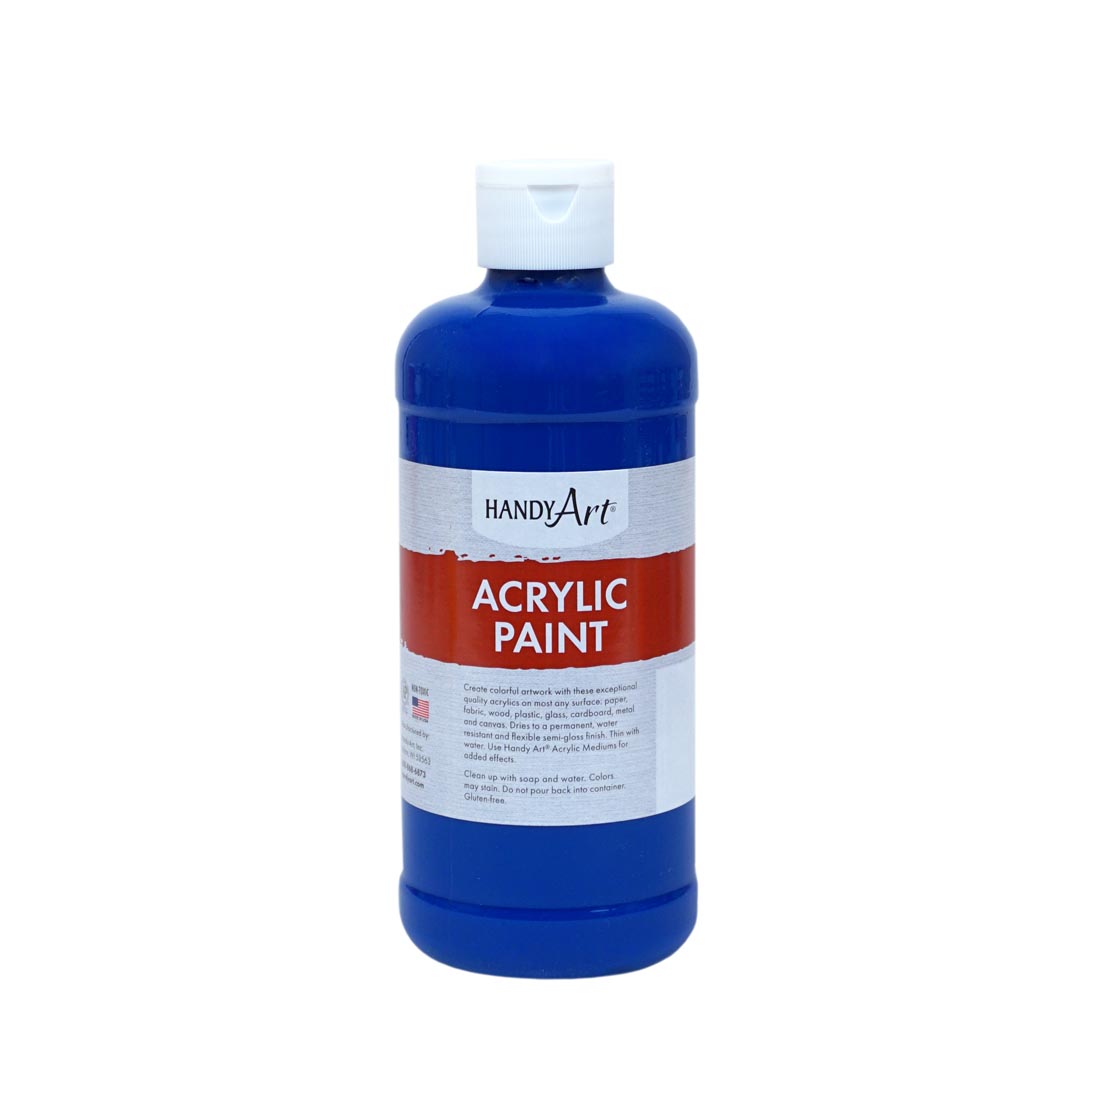 Pint Bottle of Primary Blue Handy Art Acrylic Paint